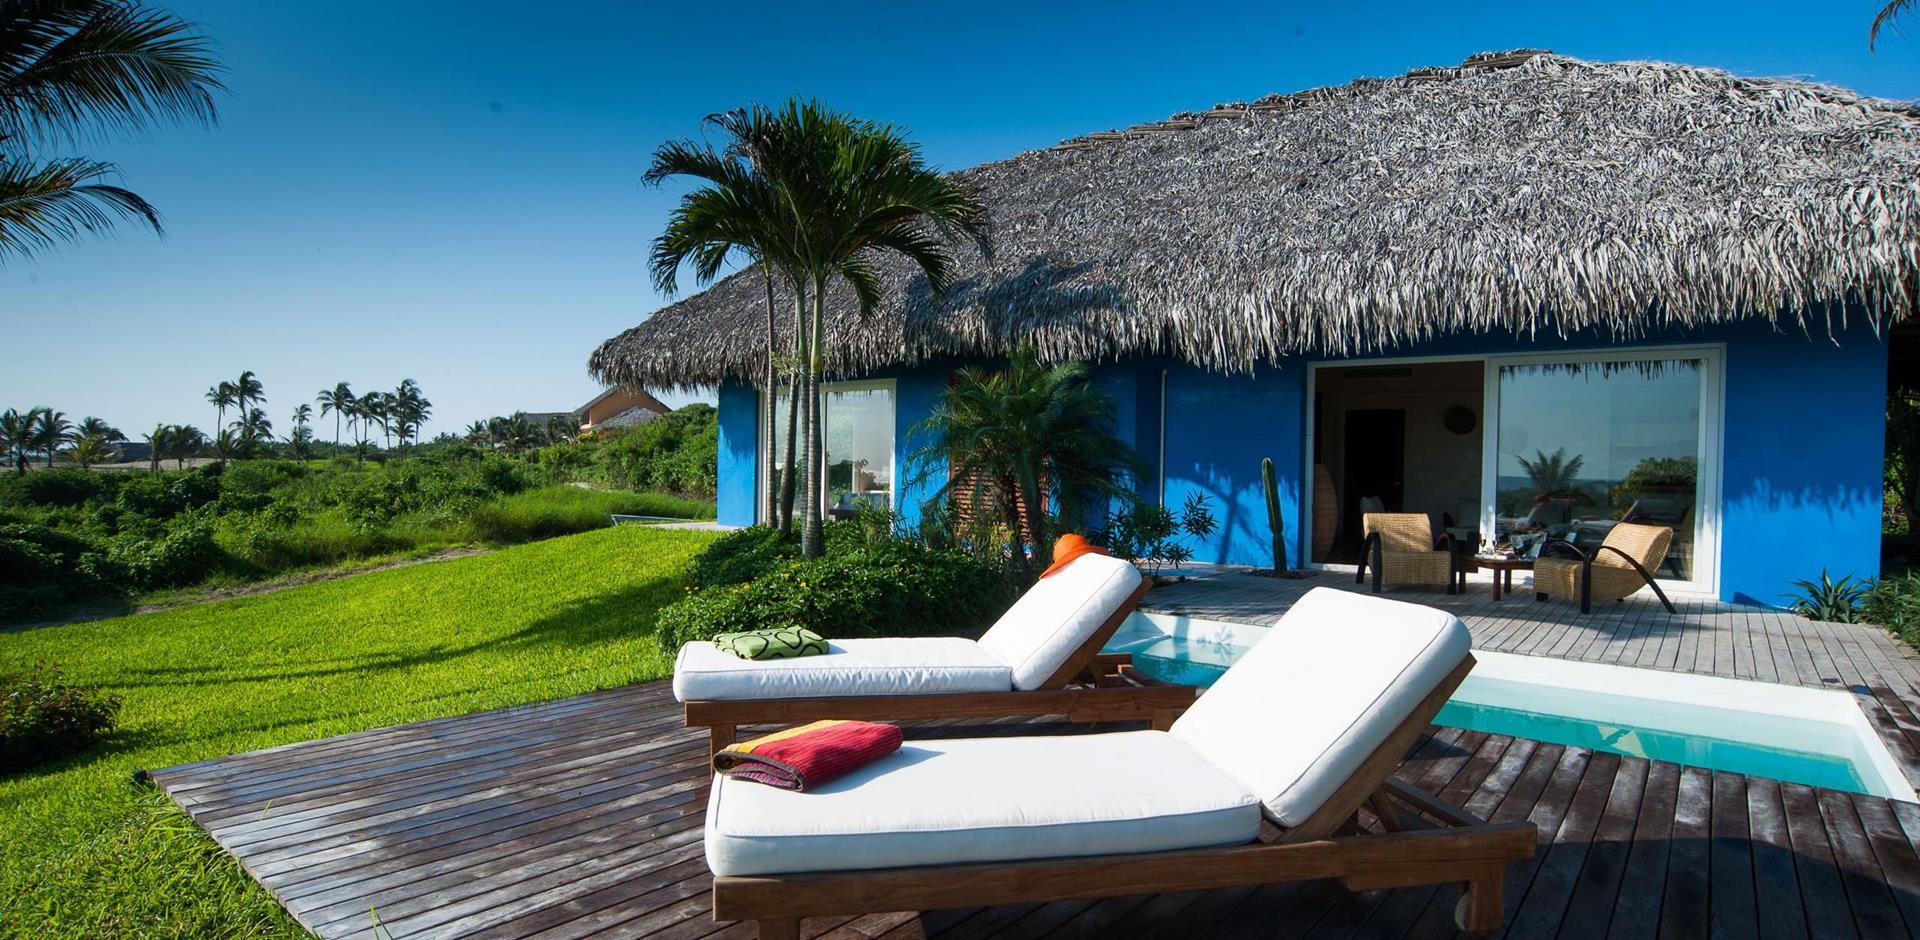 Tanusas Retreat & Spa Accommodation, Ecuador and the Galapagos, A&K